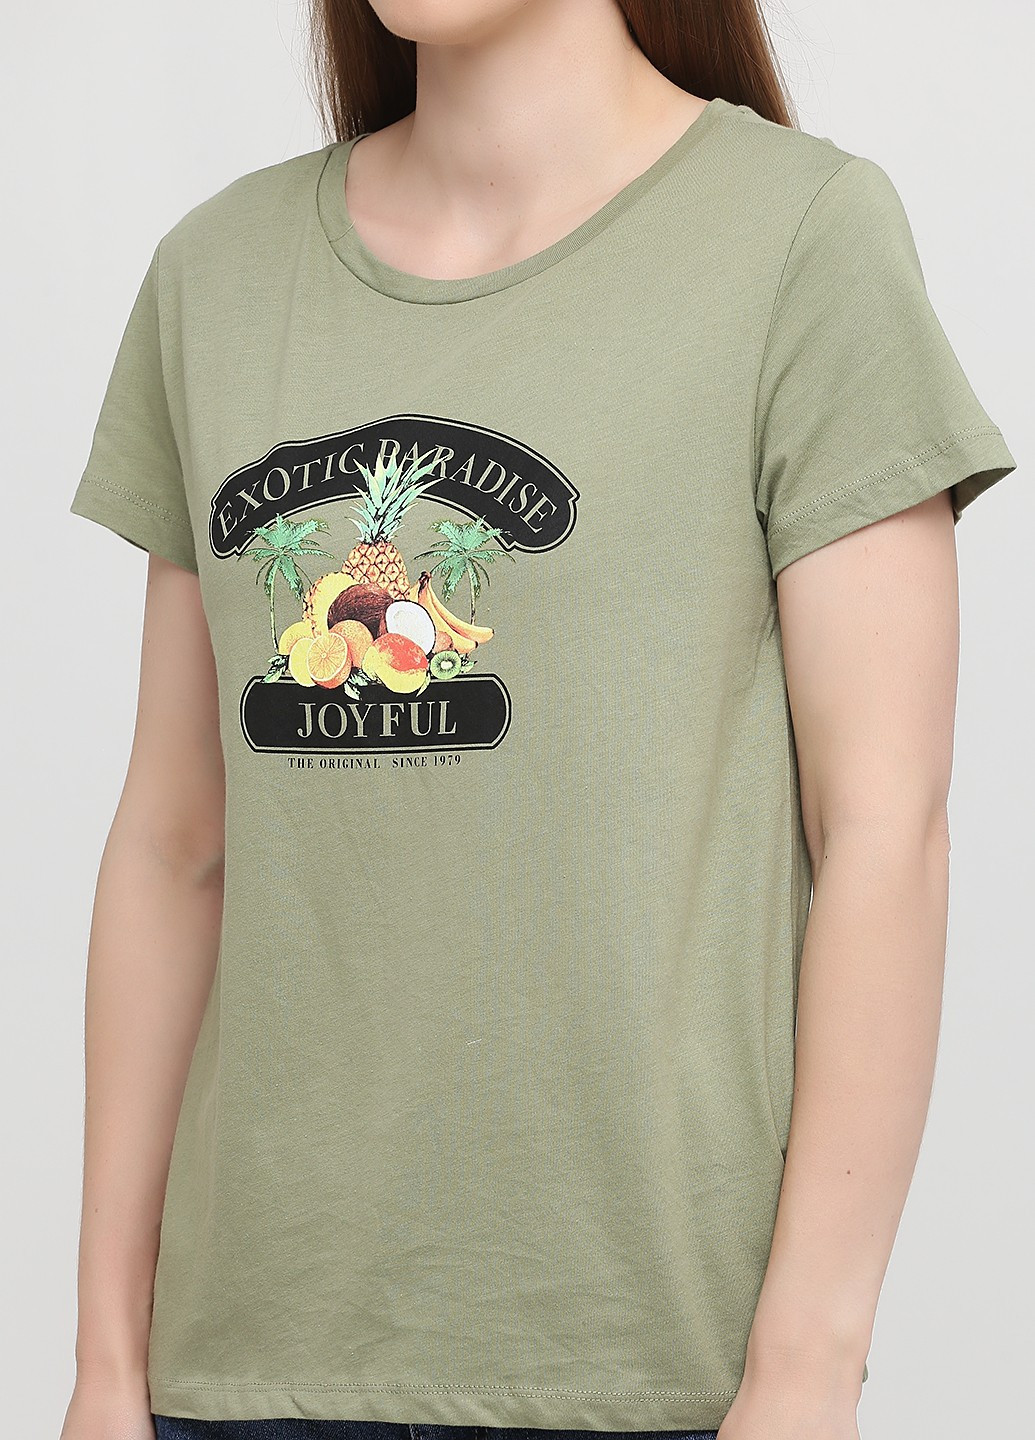 Хаки (оливковая) летняя футболка C&A